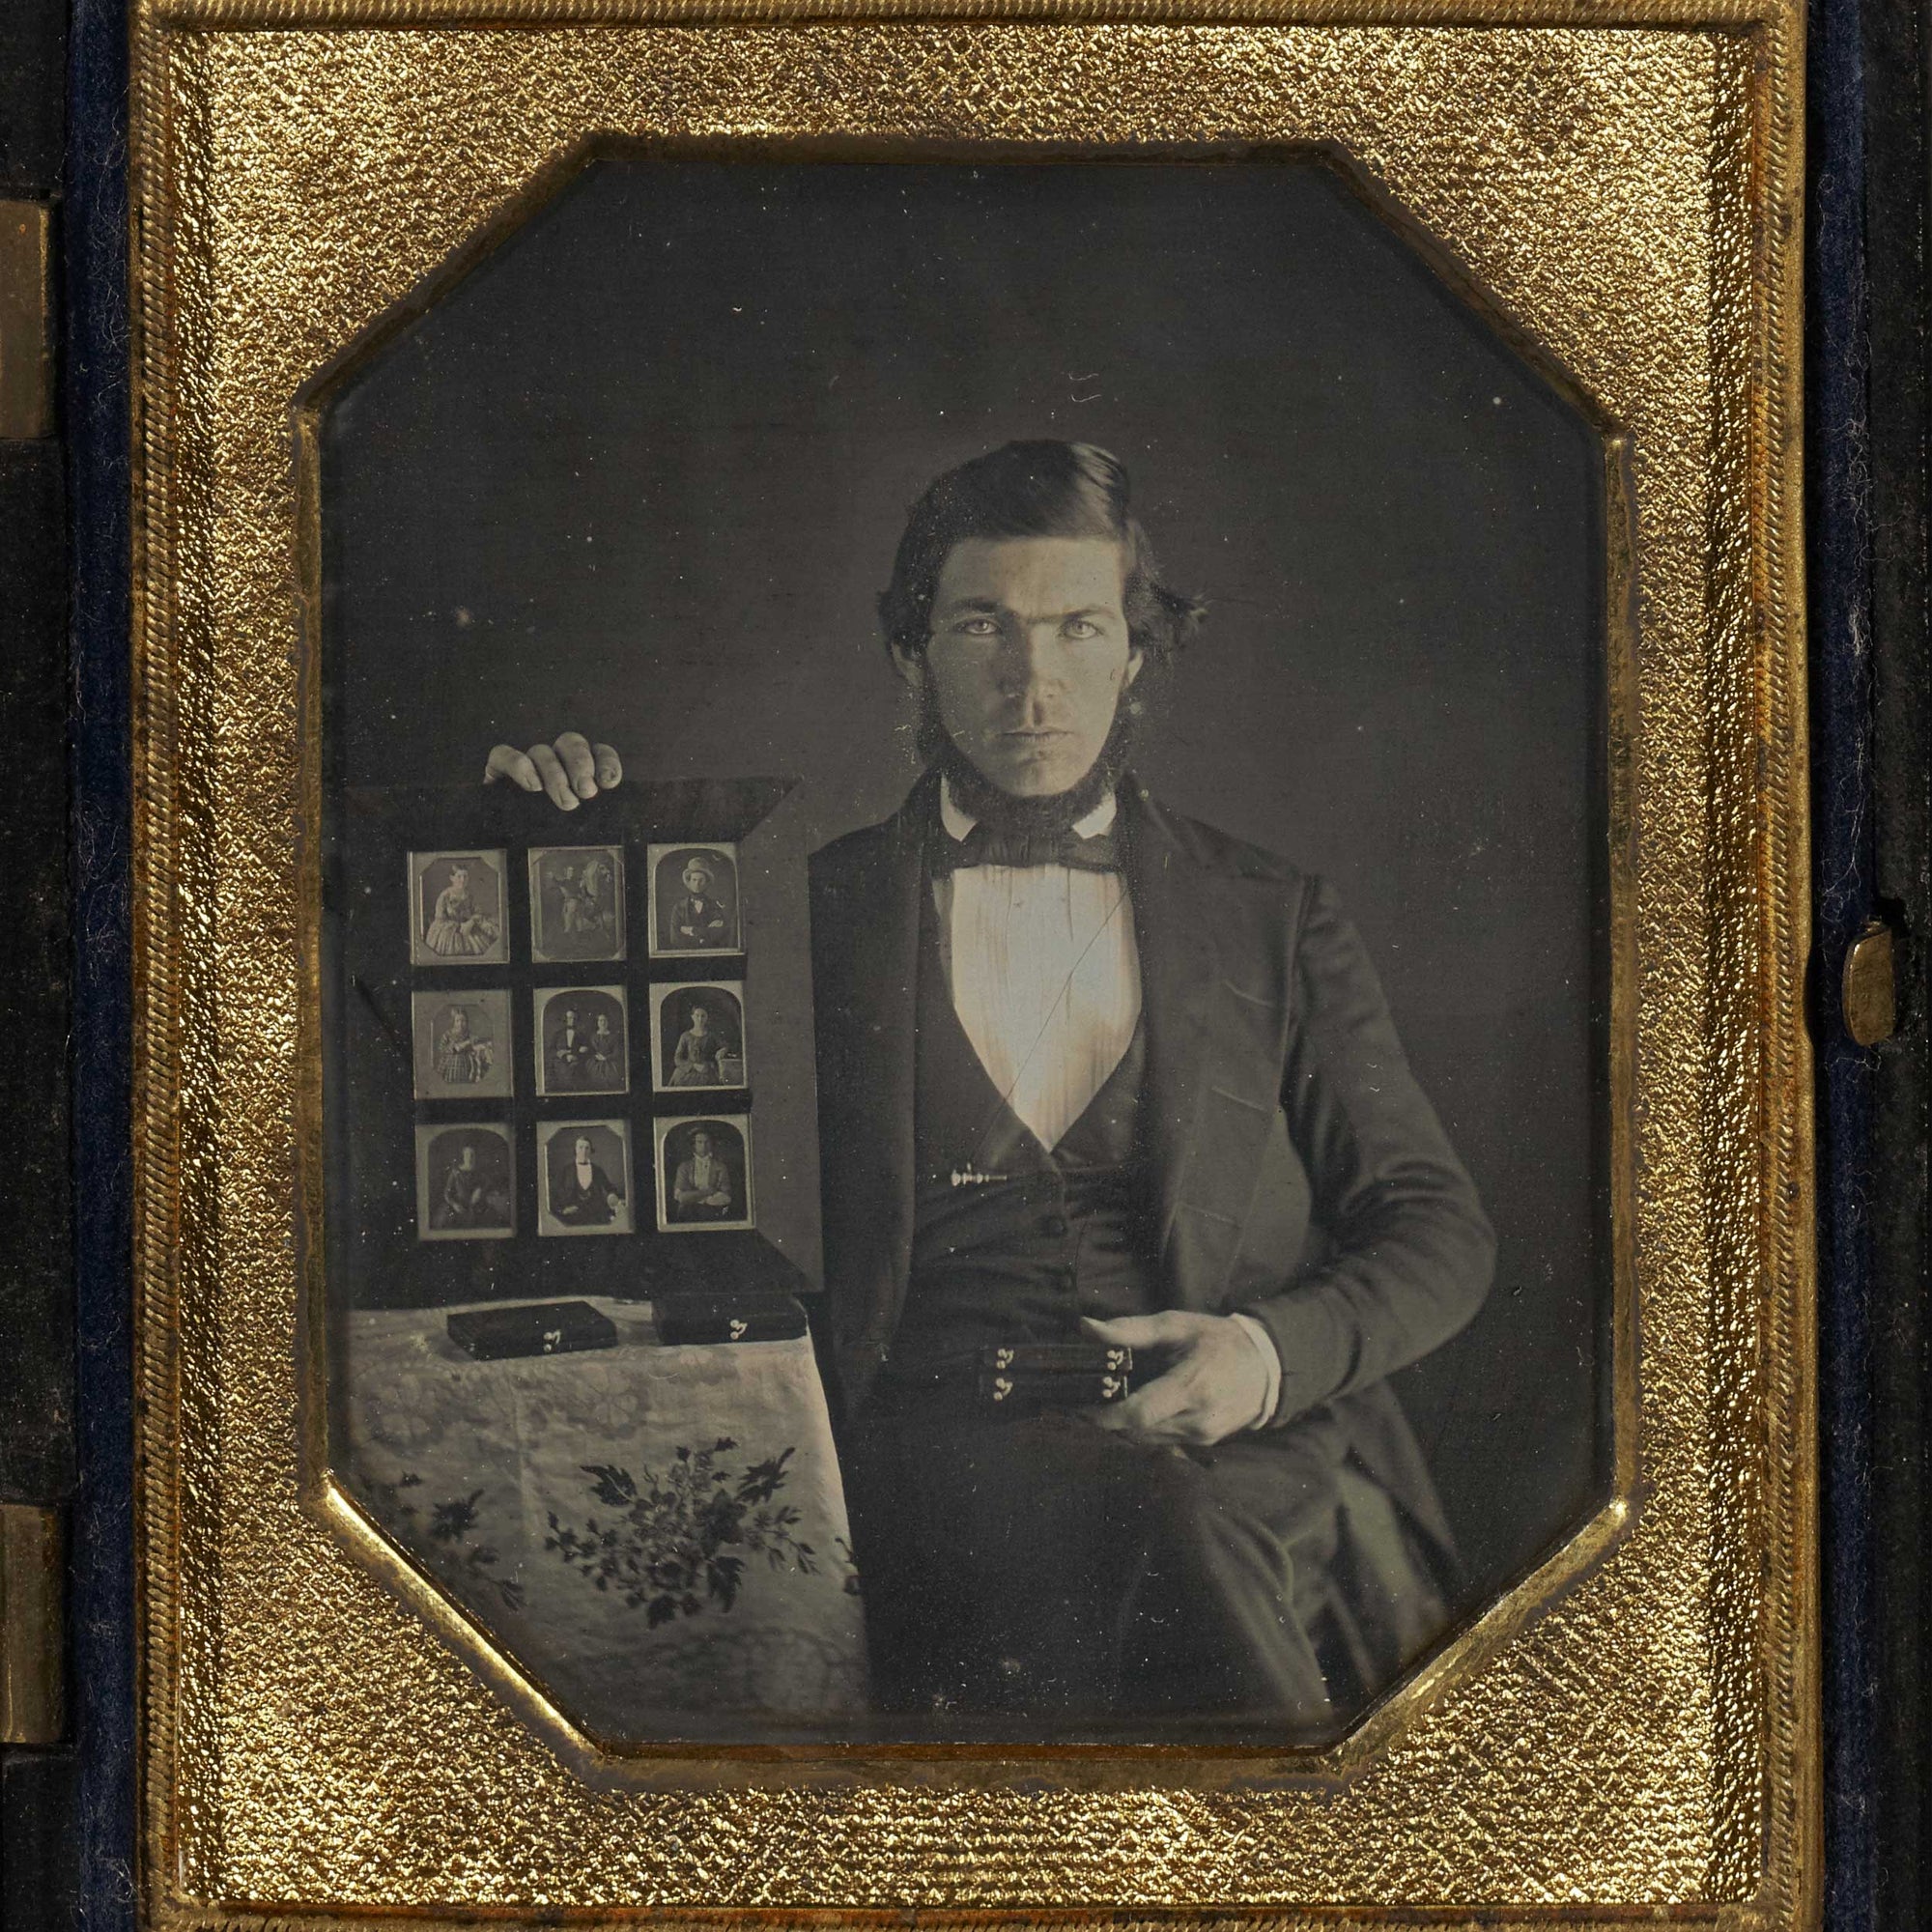 Daguerreotypes: Early Photography Explained